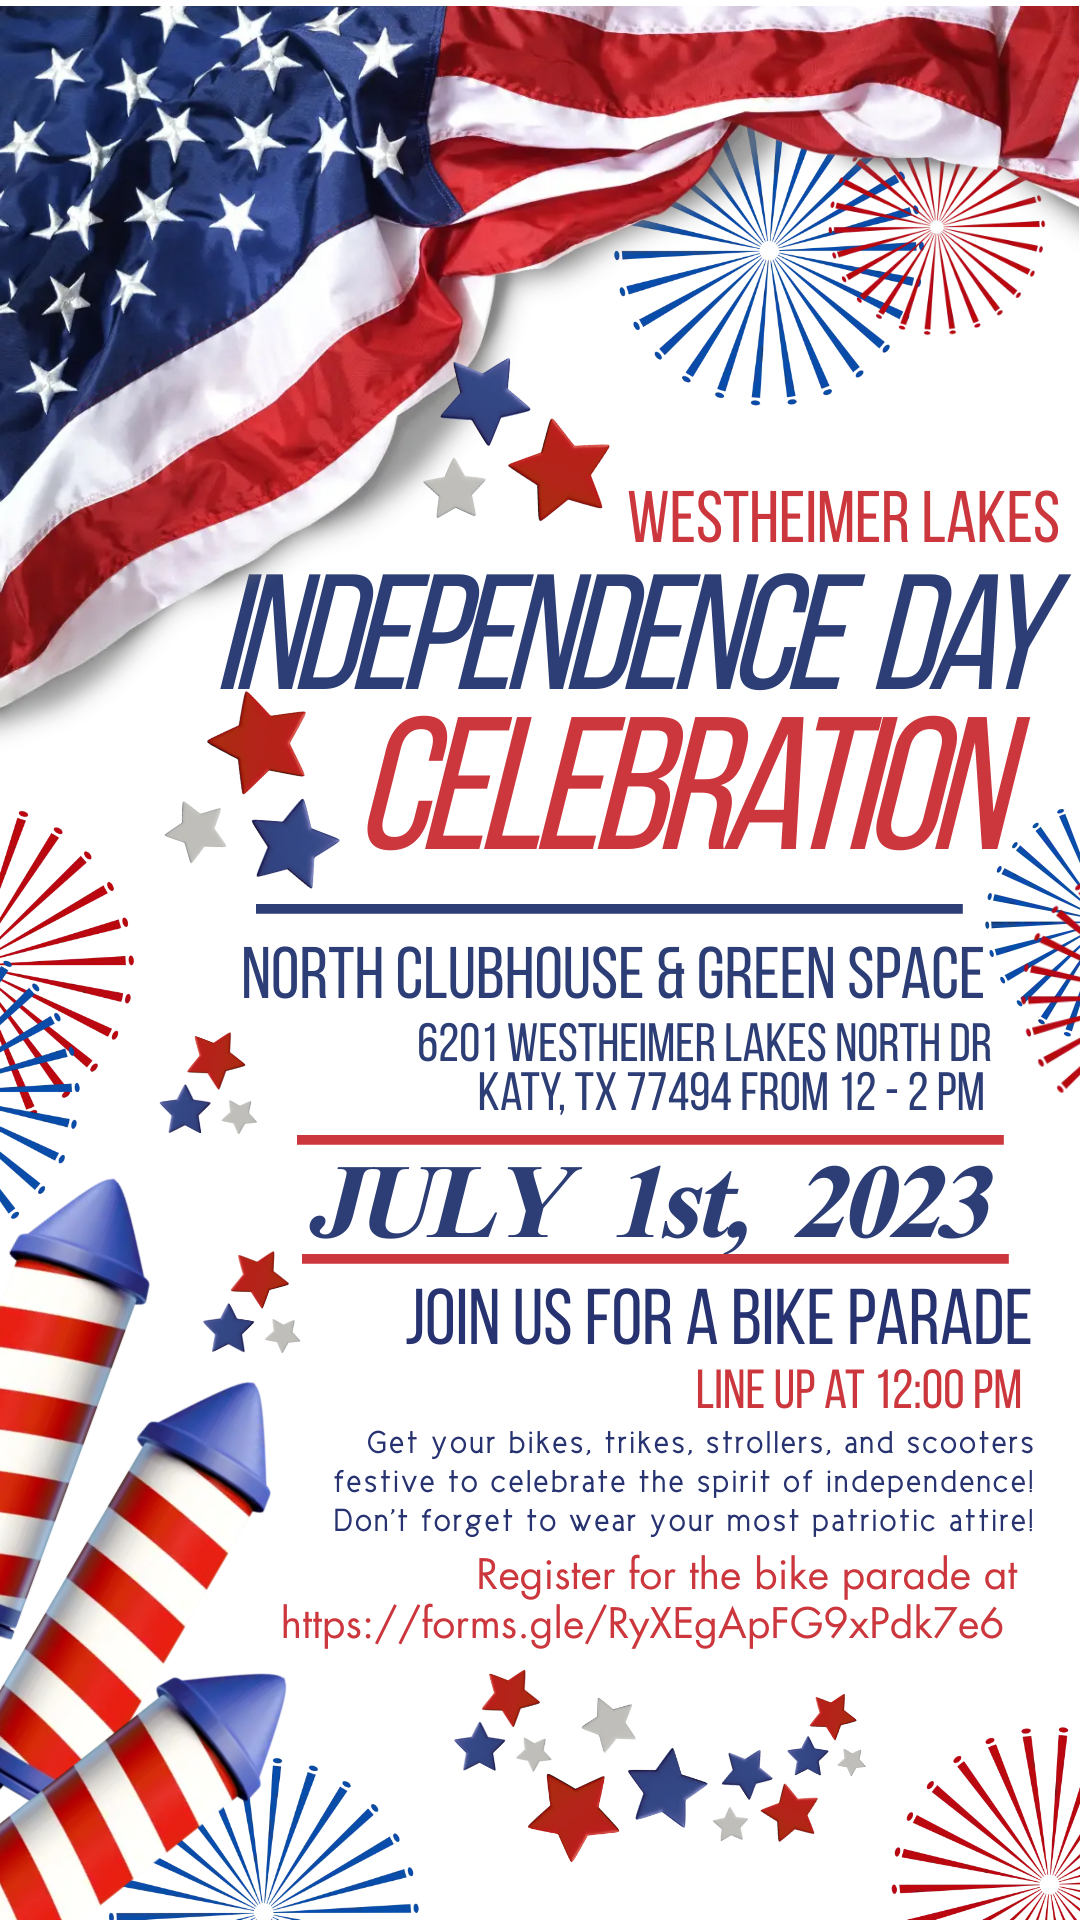 Westheimer Lakes Independence Day Celebration